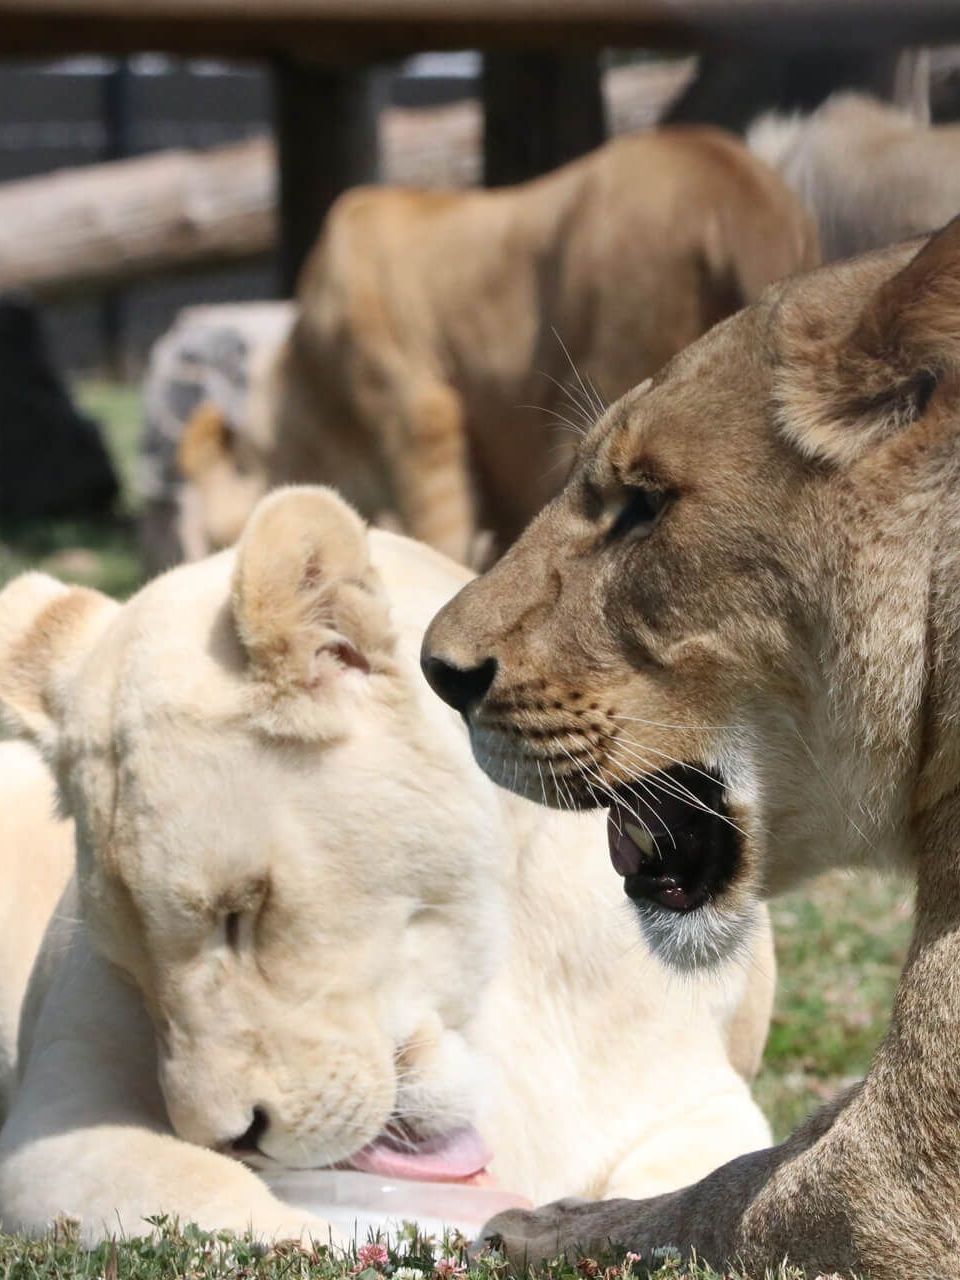 a close up of lions at interactive zoo experience niagara